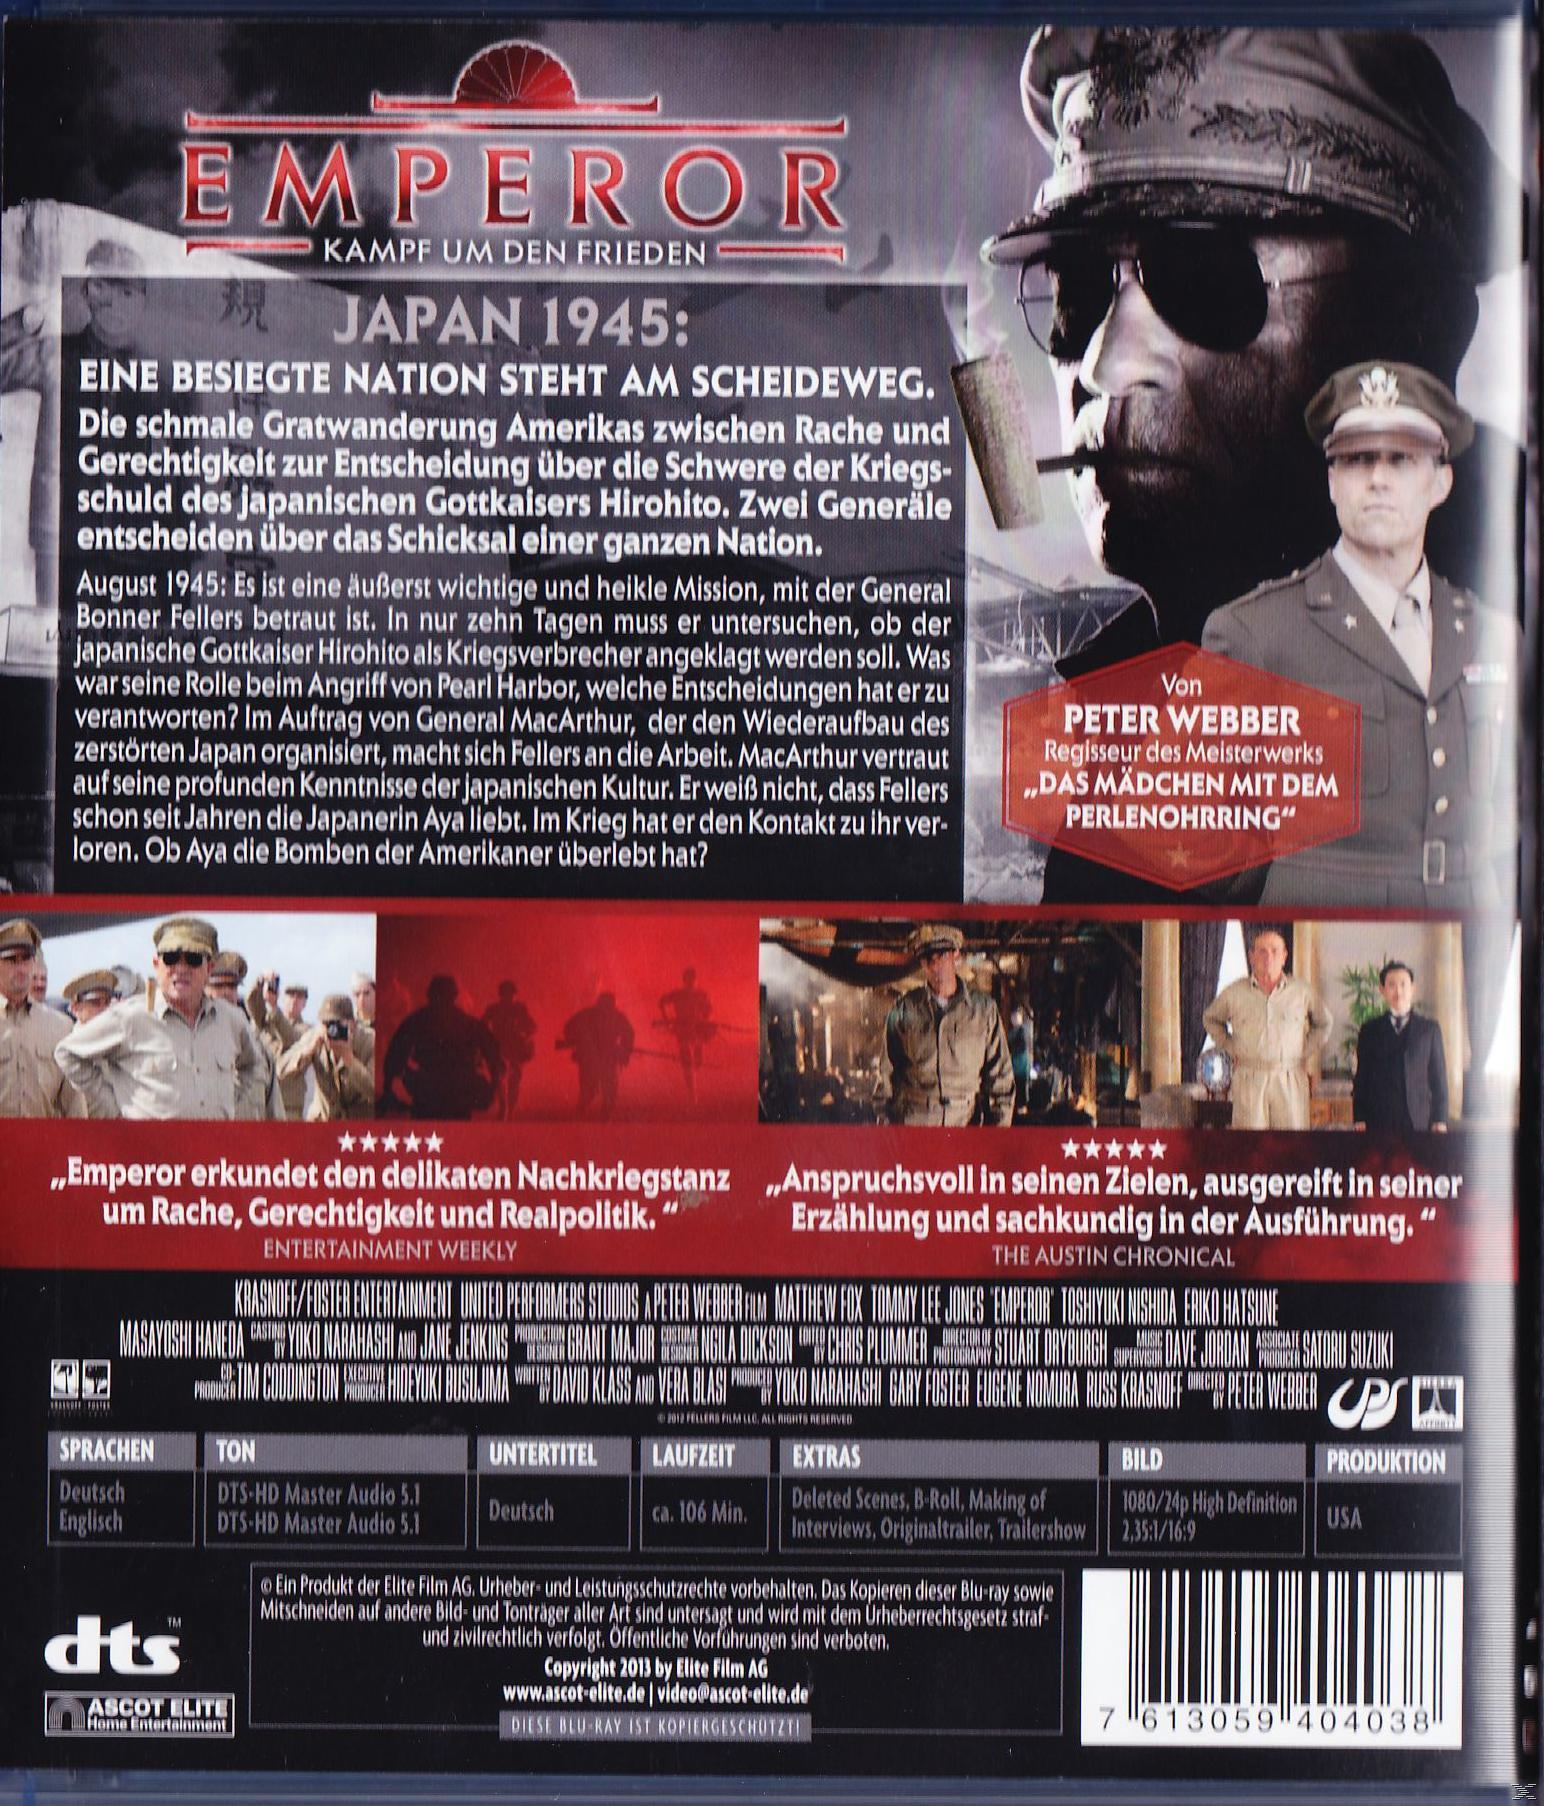 um Blu-ray Emperor Kampf Frieden -